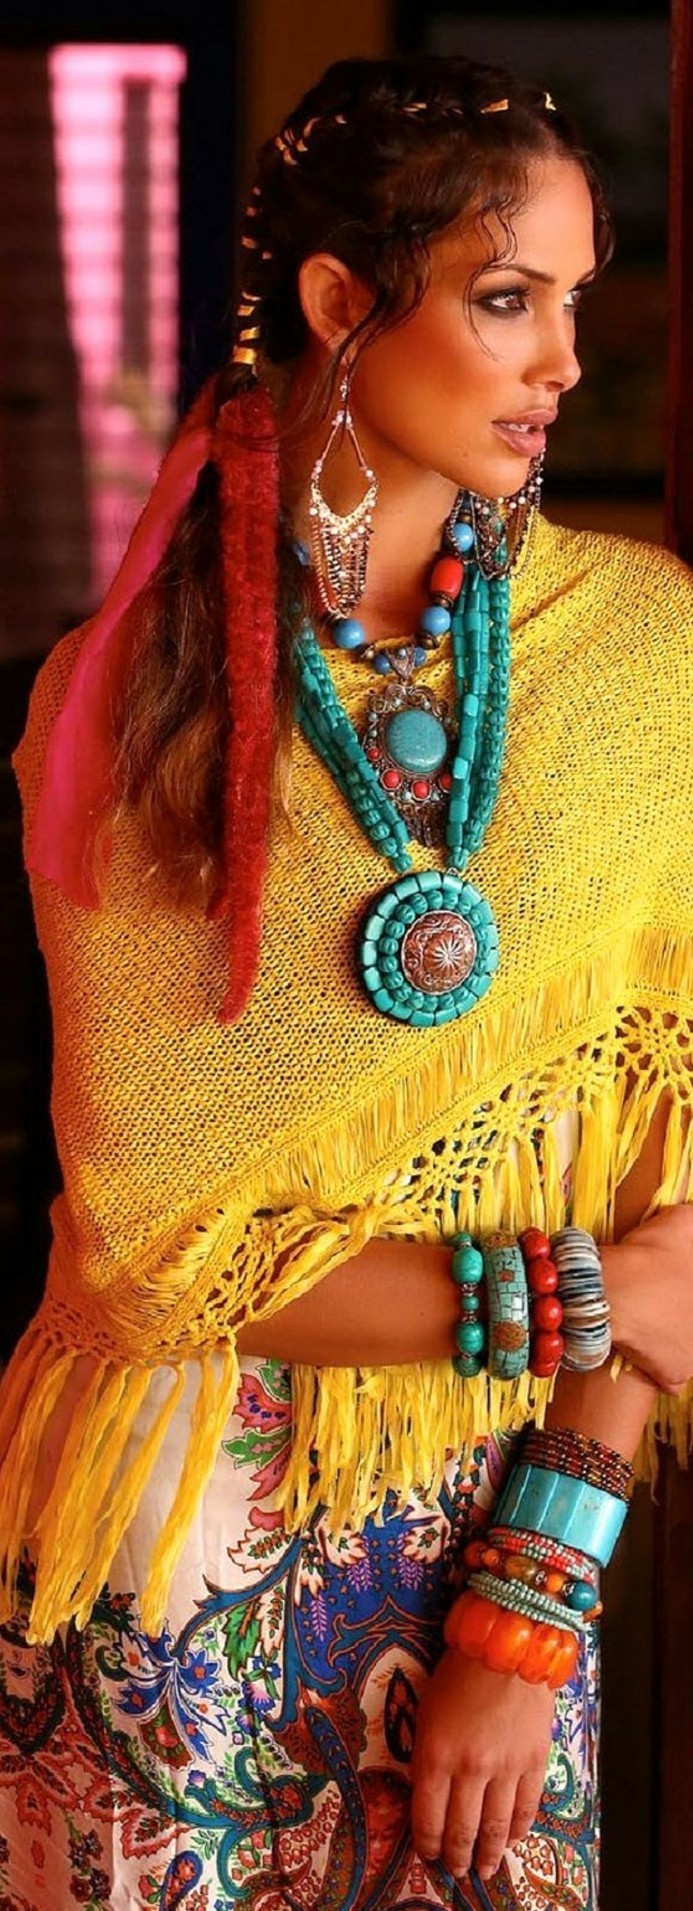 tenue boheme, foulard jaune et bijoux ethniques